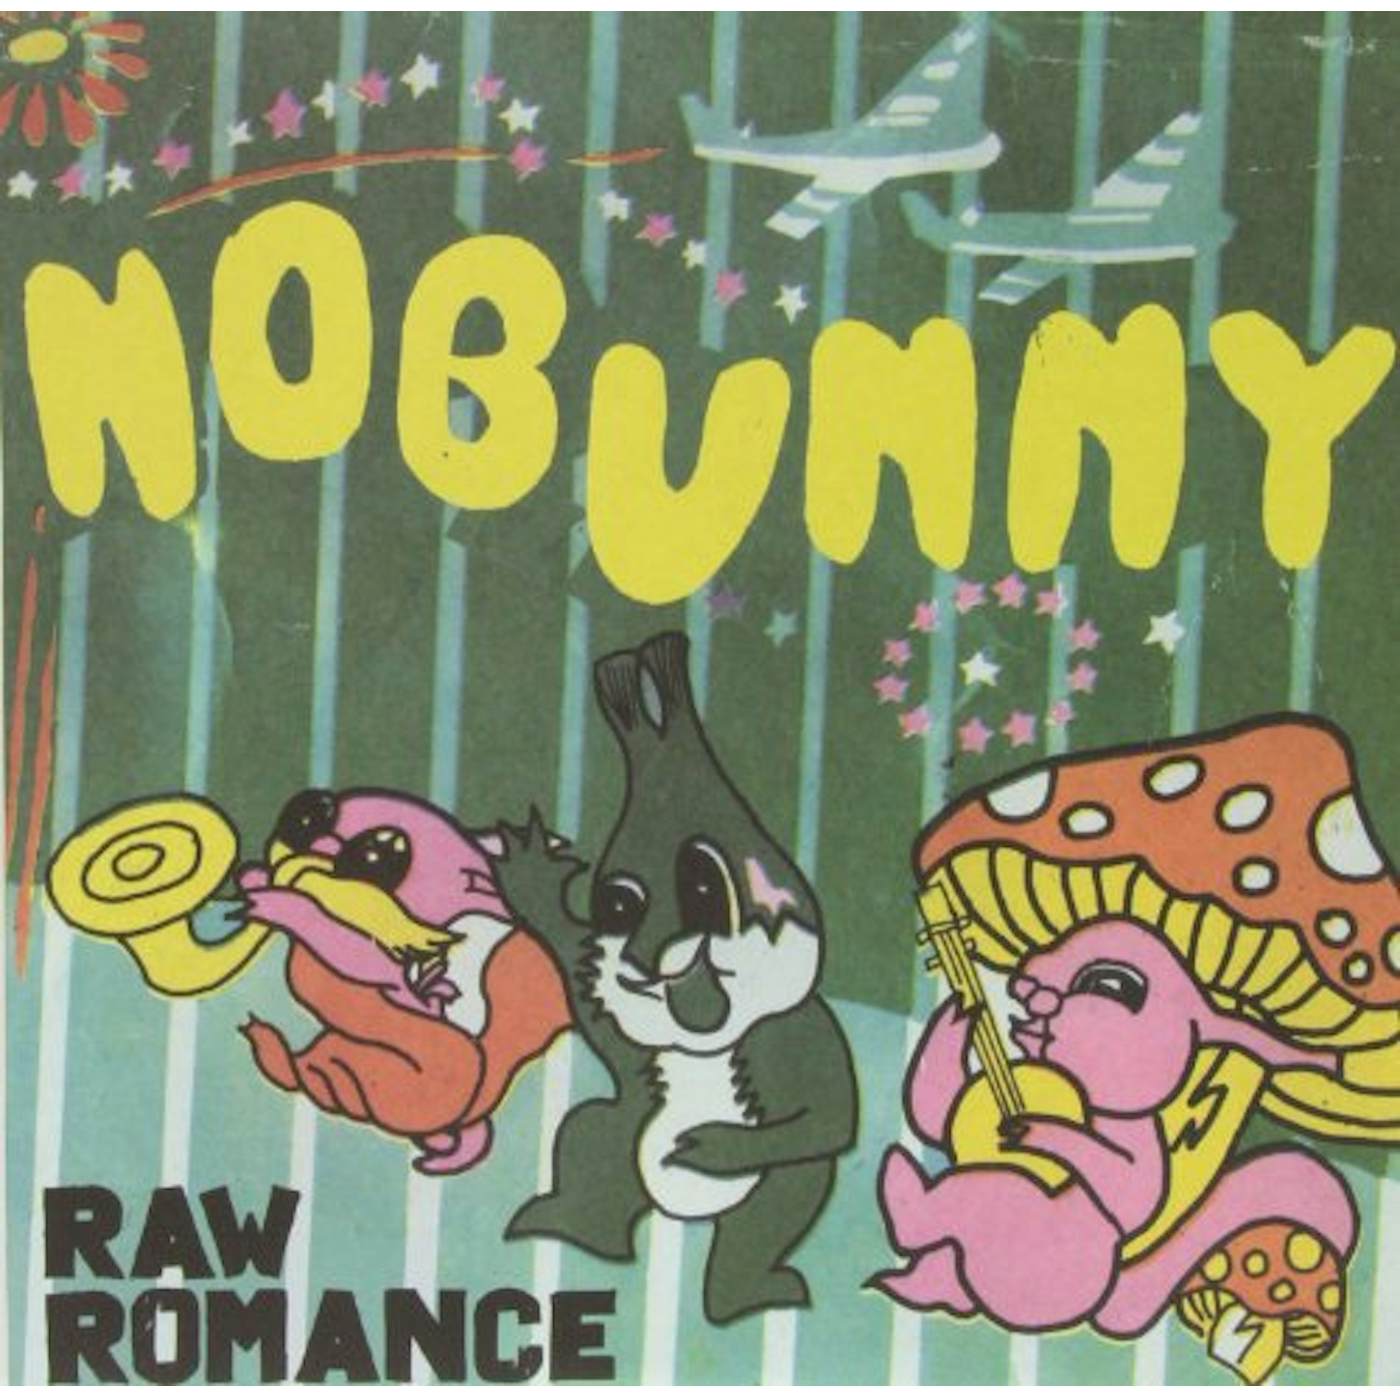 Nobunny RAW ROMANCE Vinyl Record